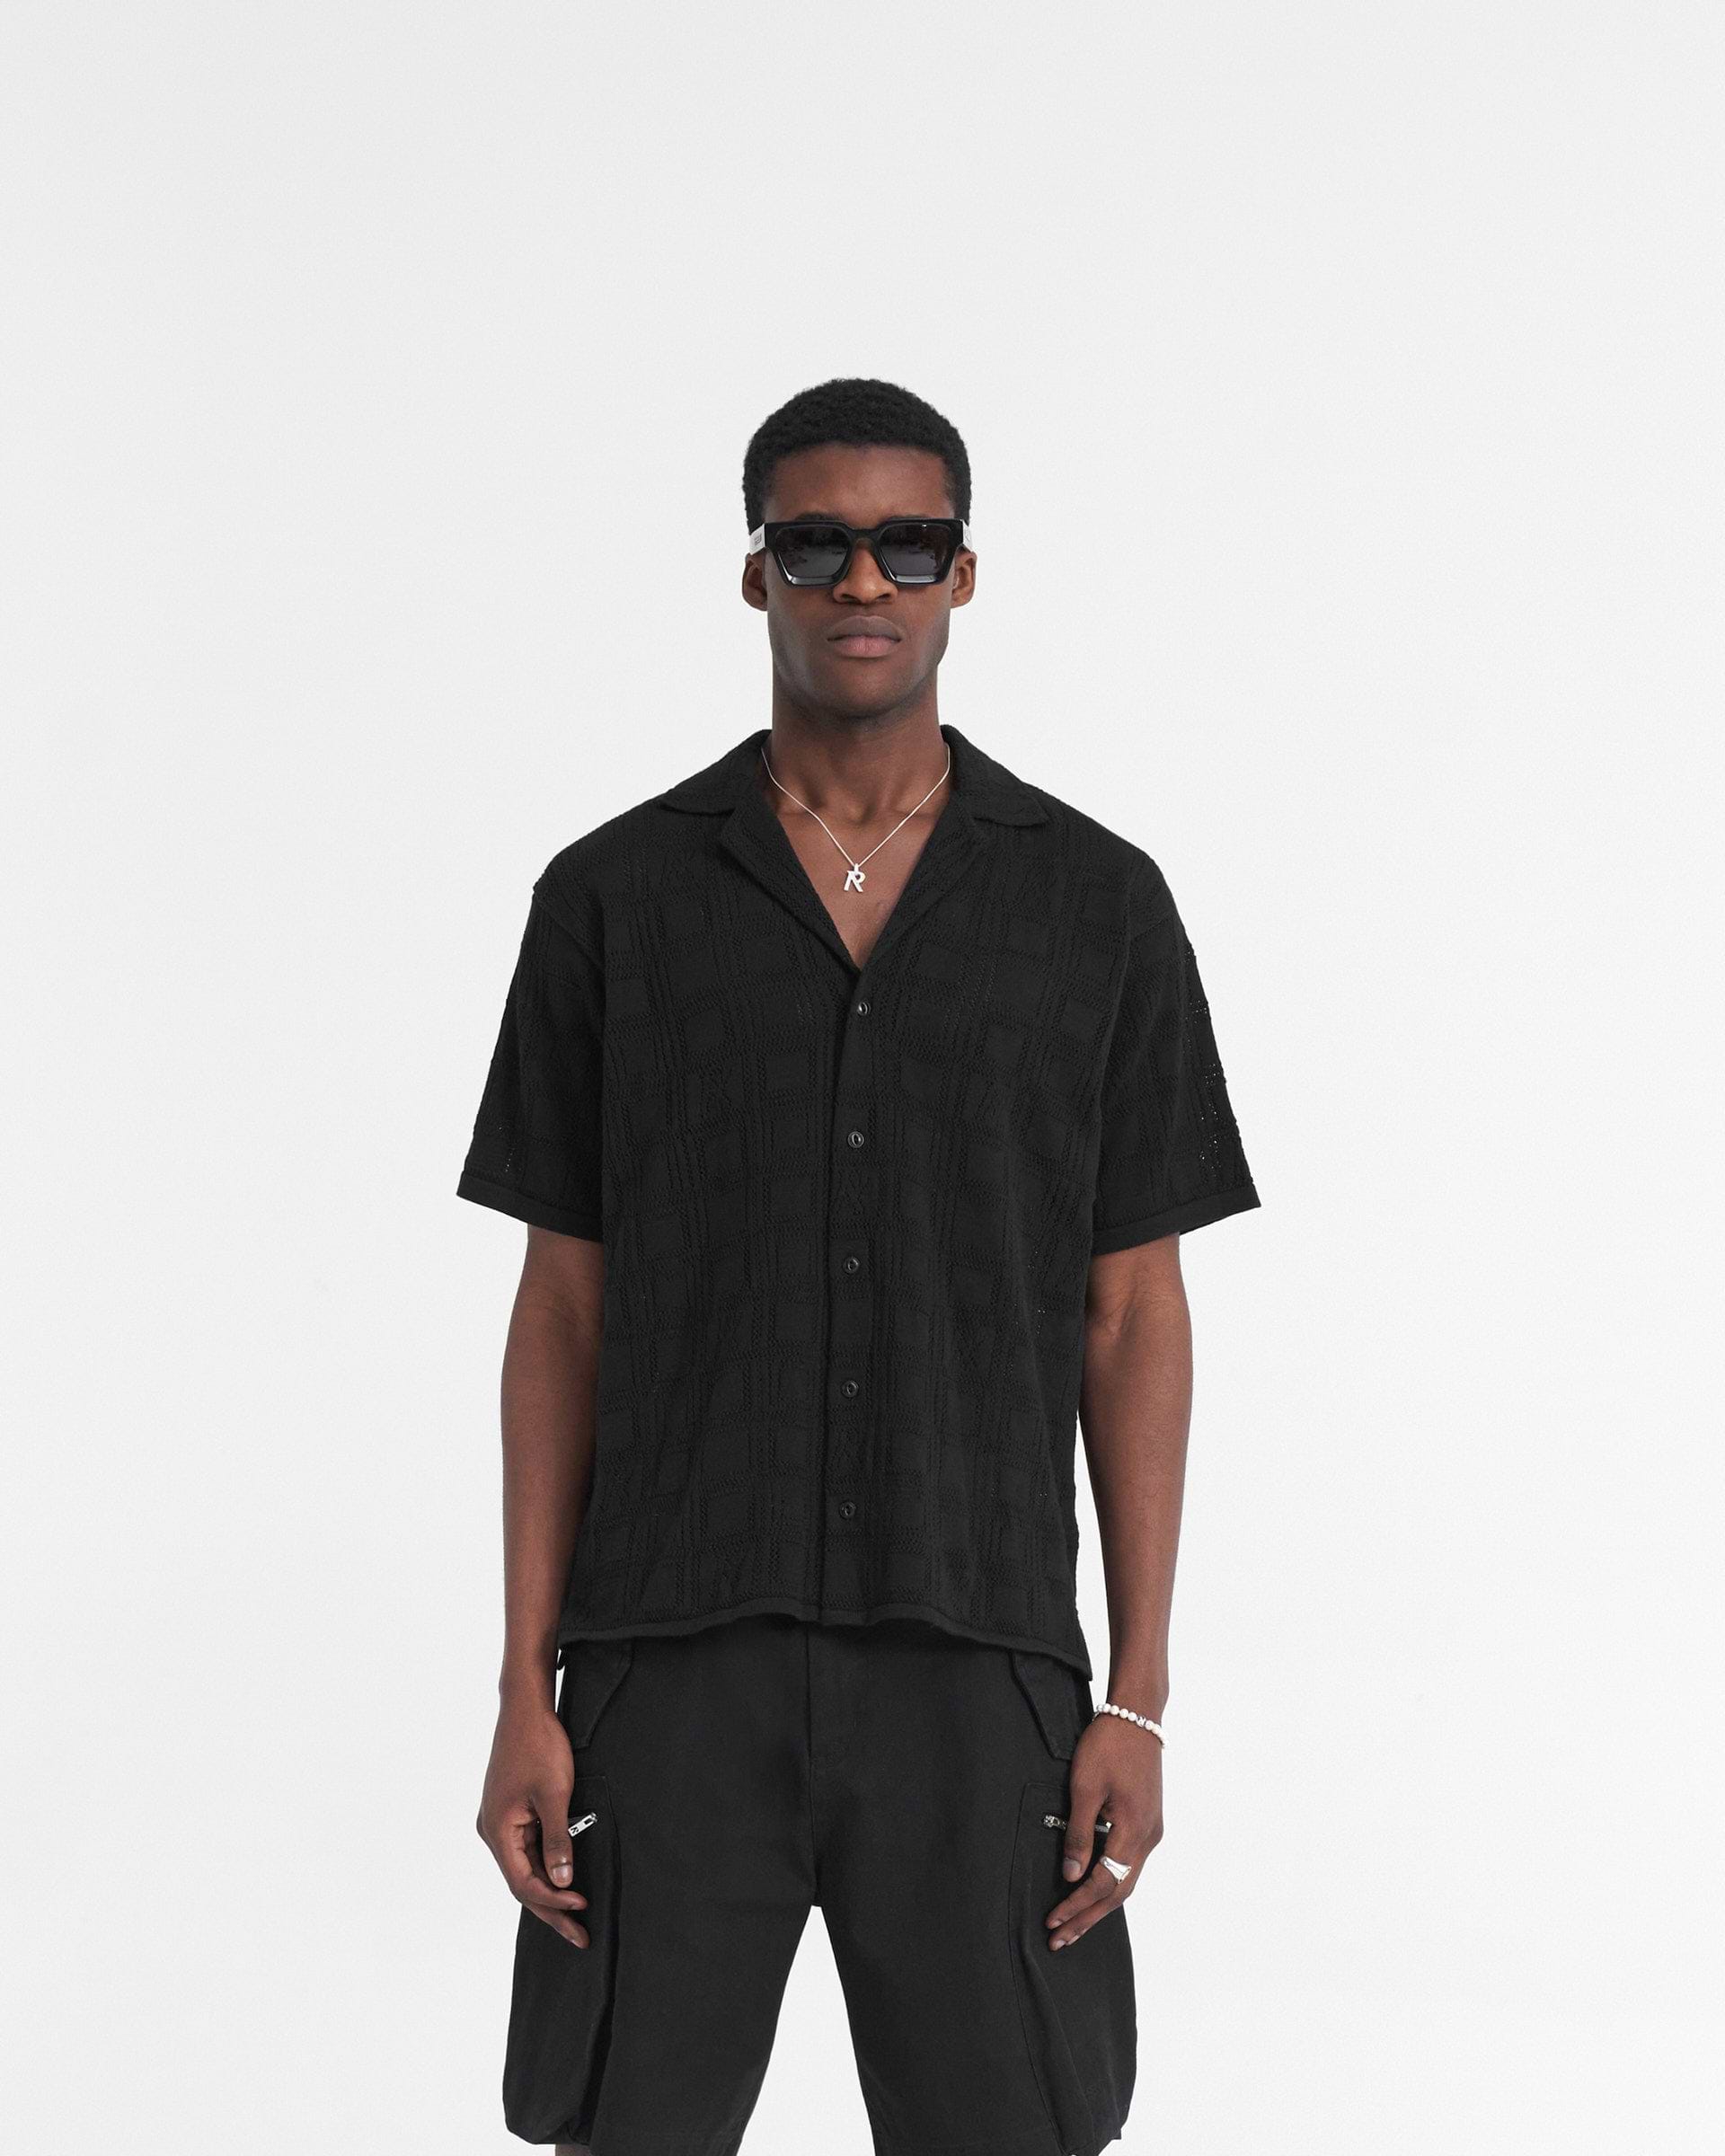 Lace Knit Shirt - Black